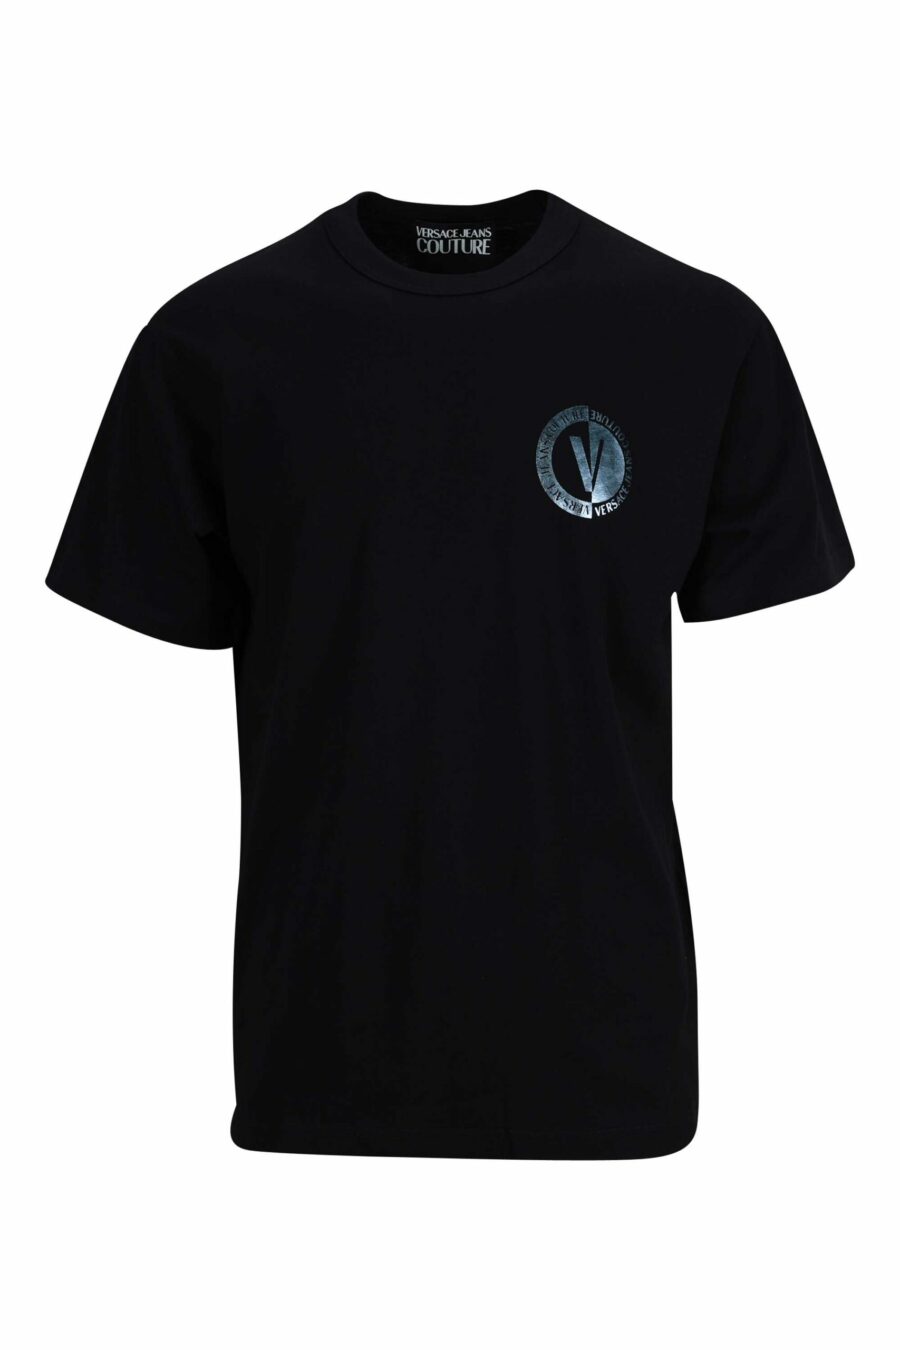 T-shirt preta com mini-logotipo circular azul metalizado - 8052019402216 scaled